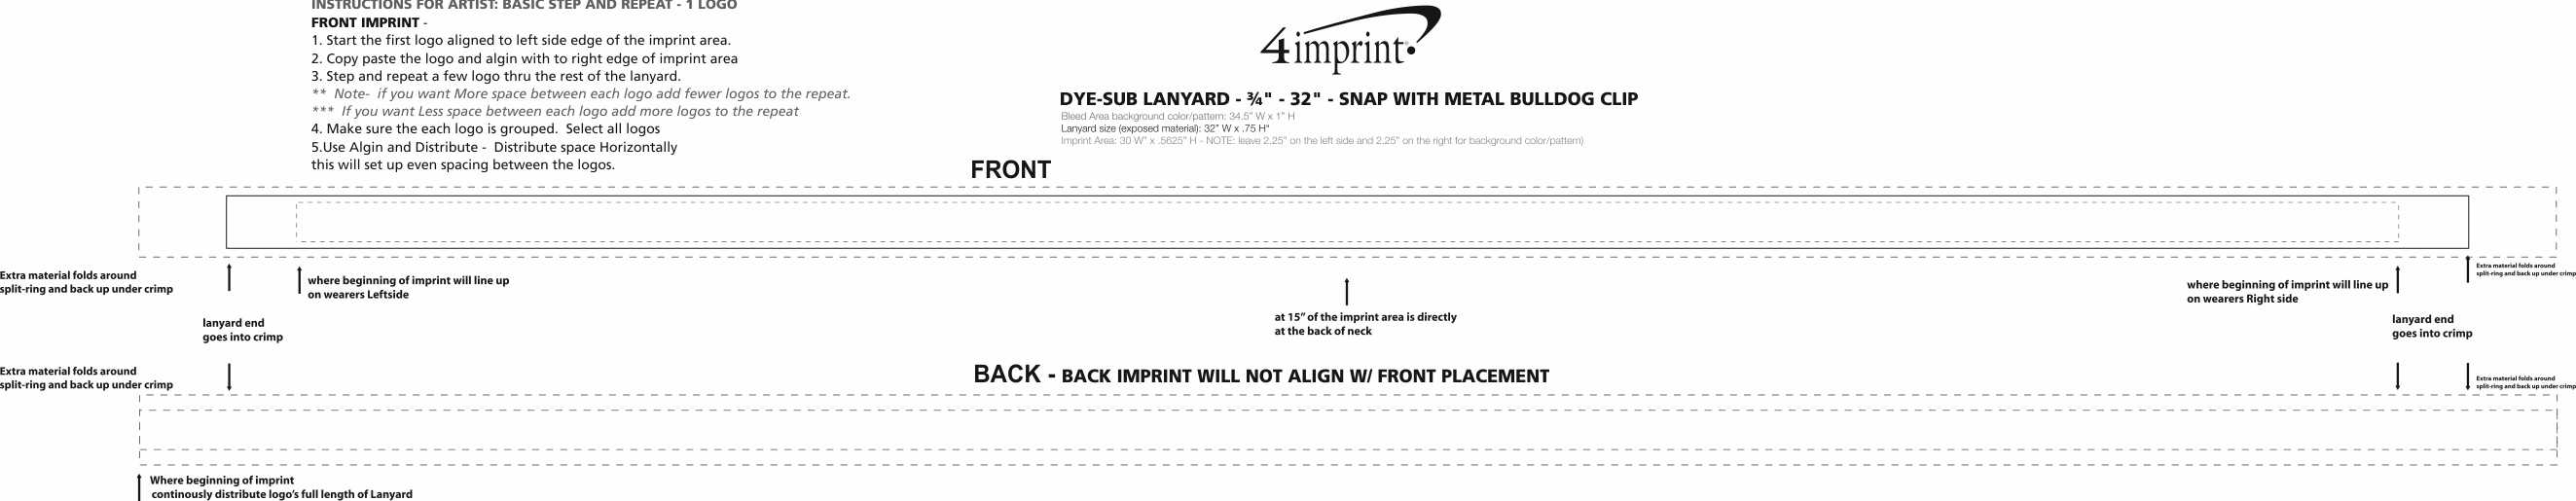 Imprint Area of Dye-Sub Lanyard - 3/4" - 32" - Snap with Metal Bulldog Clip - 24 hr